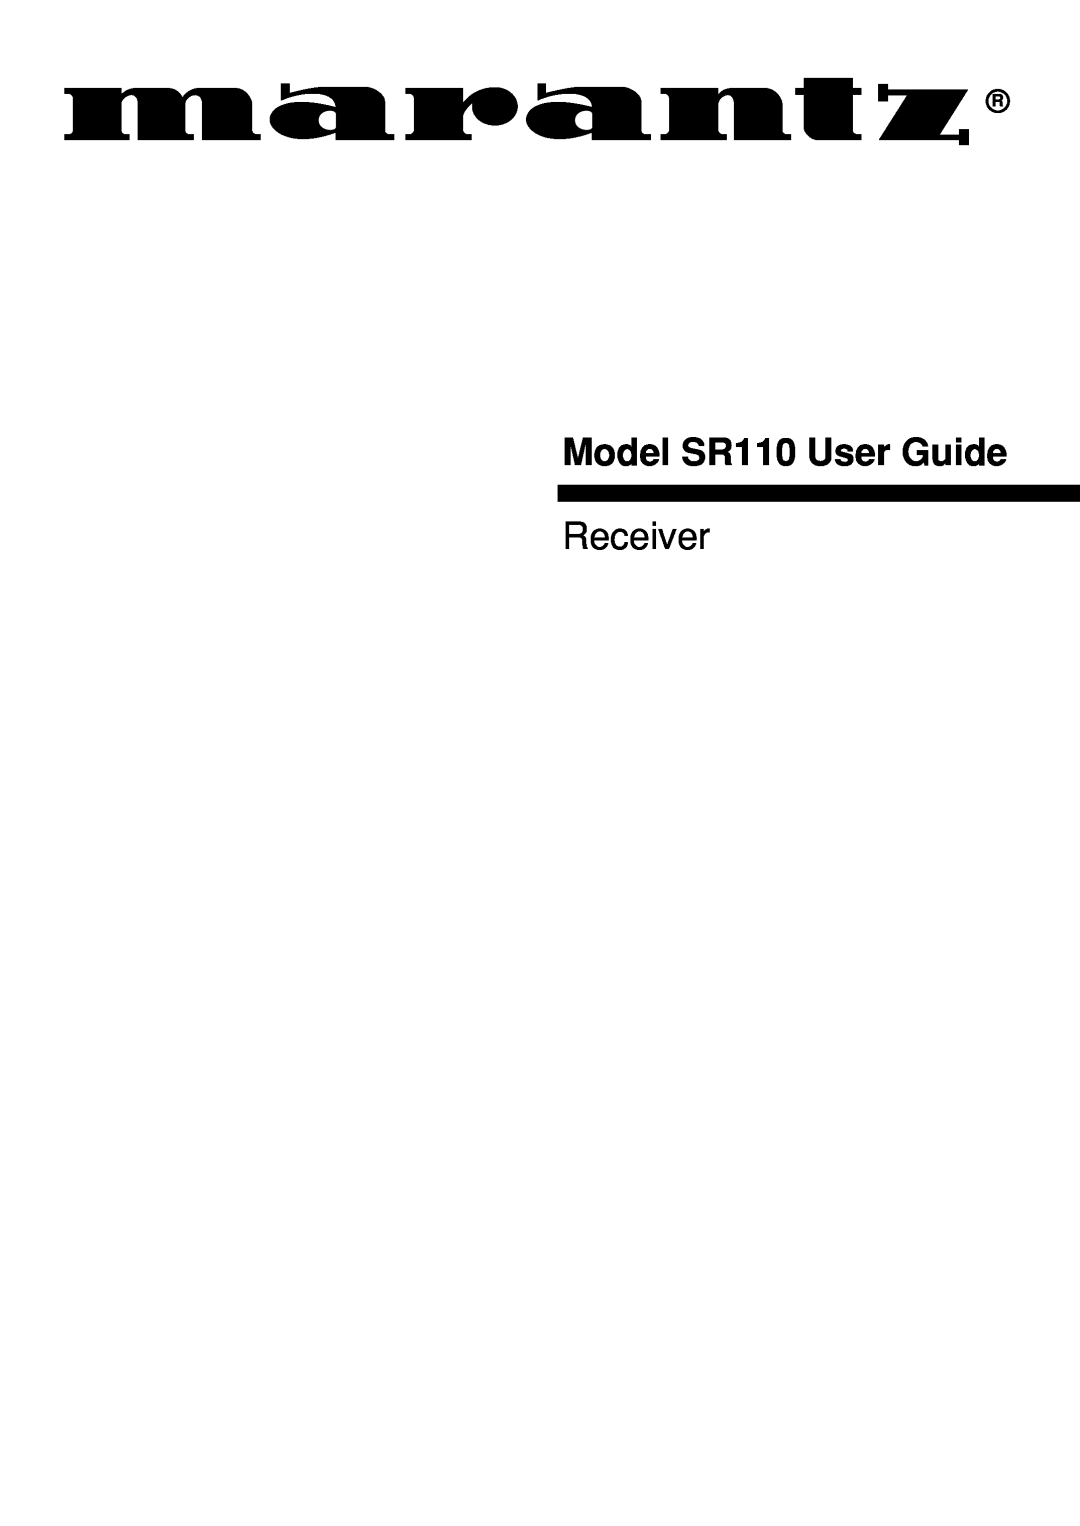 Marantz CD110 manual Model SR110 User Guide, Receiver 